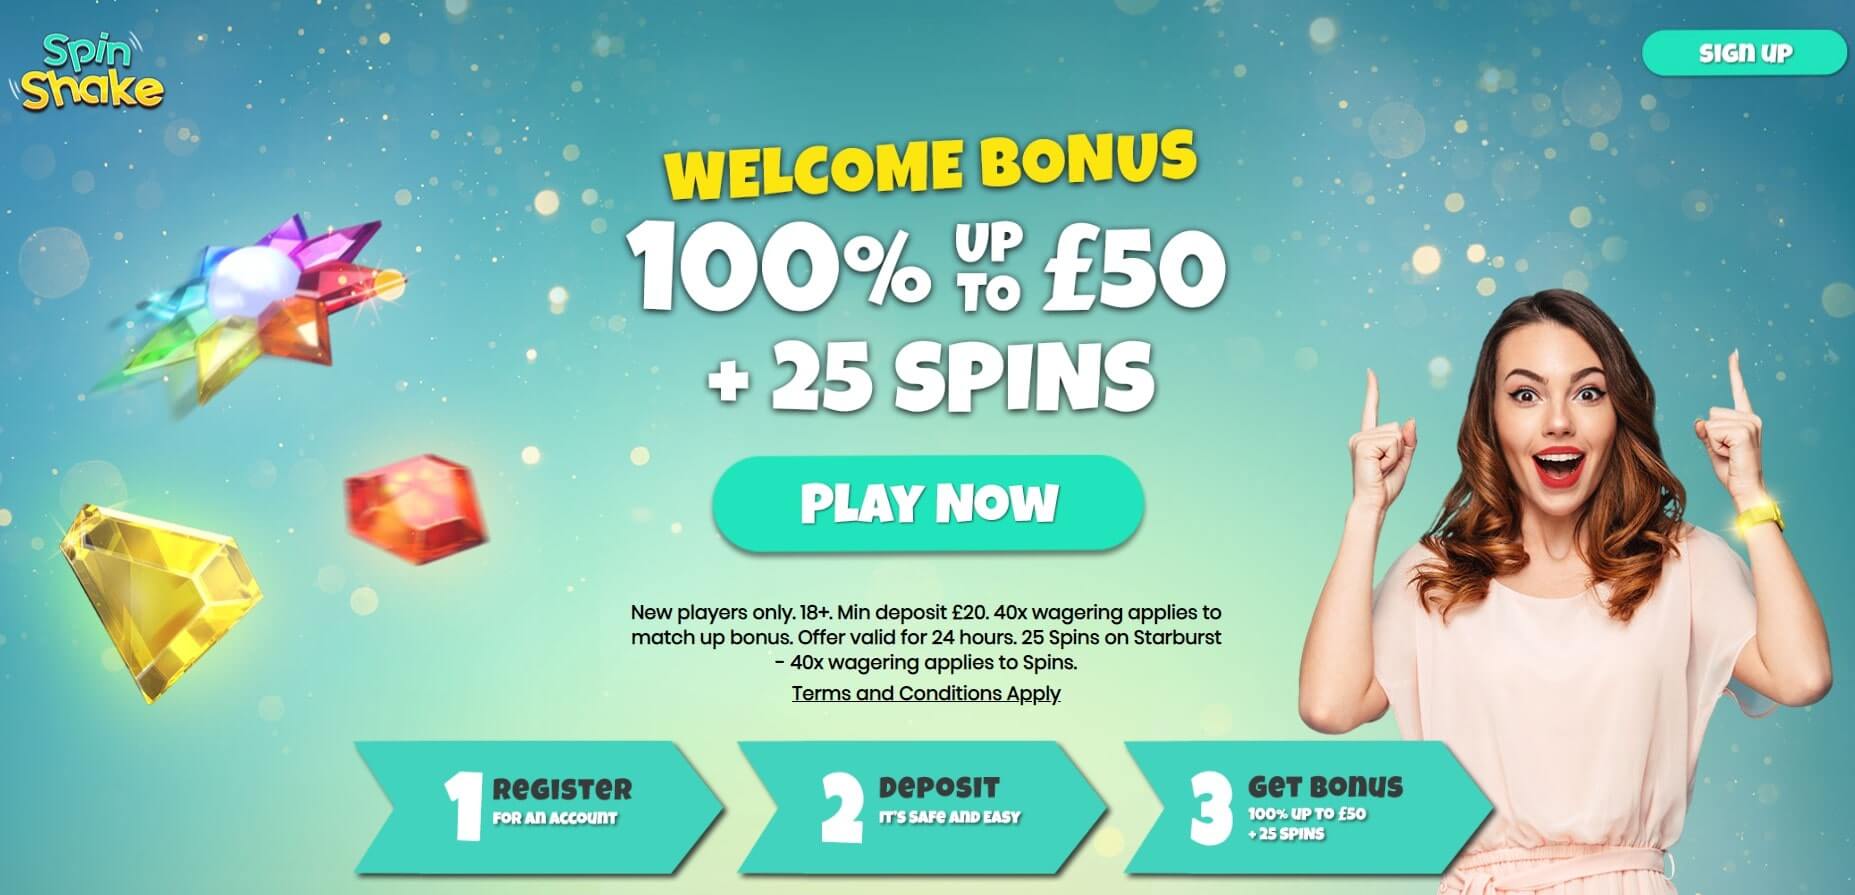 spinshake welcome bonus